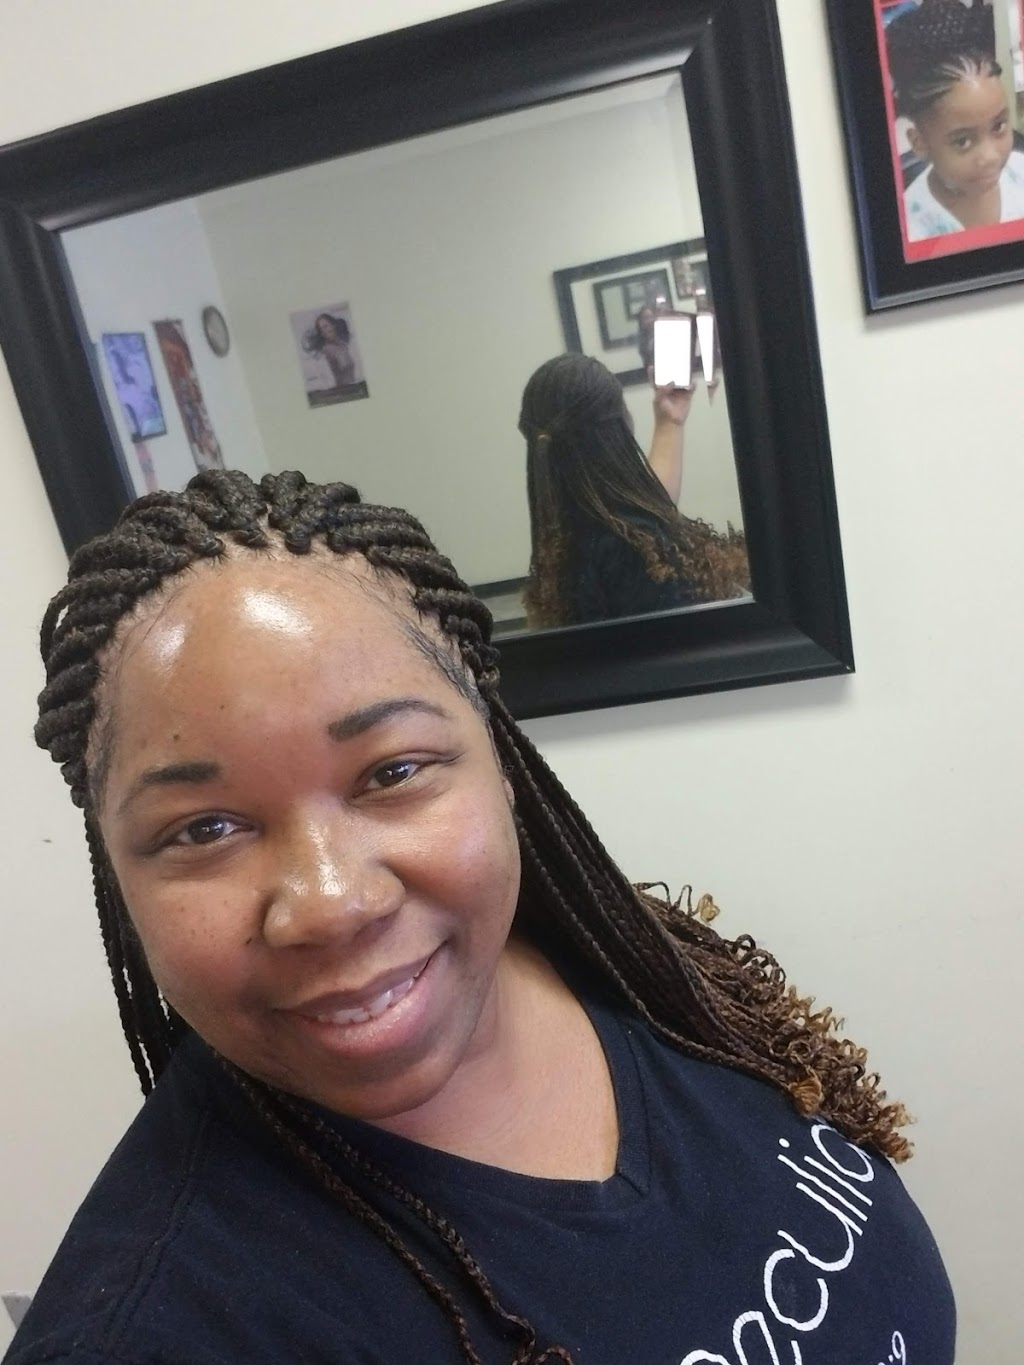 M & D Hair Braiding | 4693 Jonesboro Rd, Forest Park, GA 30297, USA | Phone: (470) 270-8890